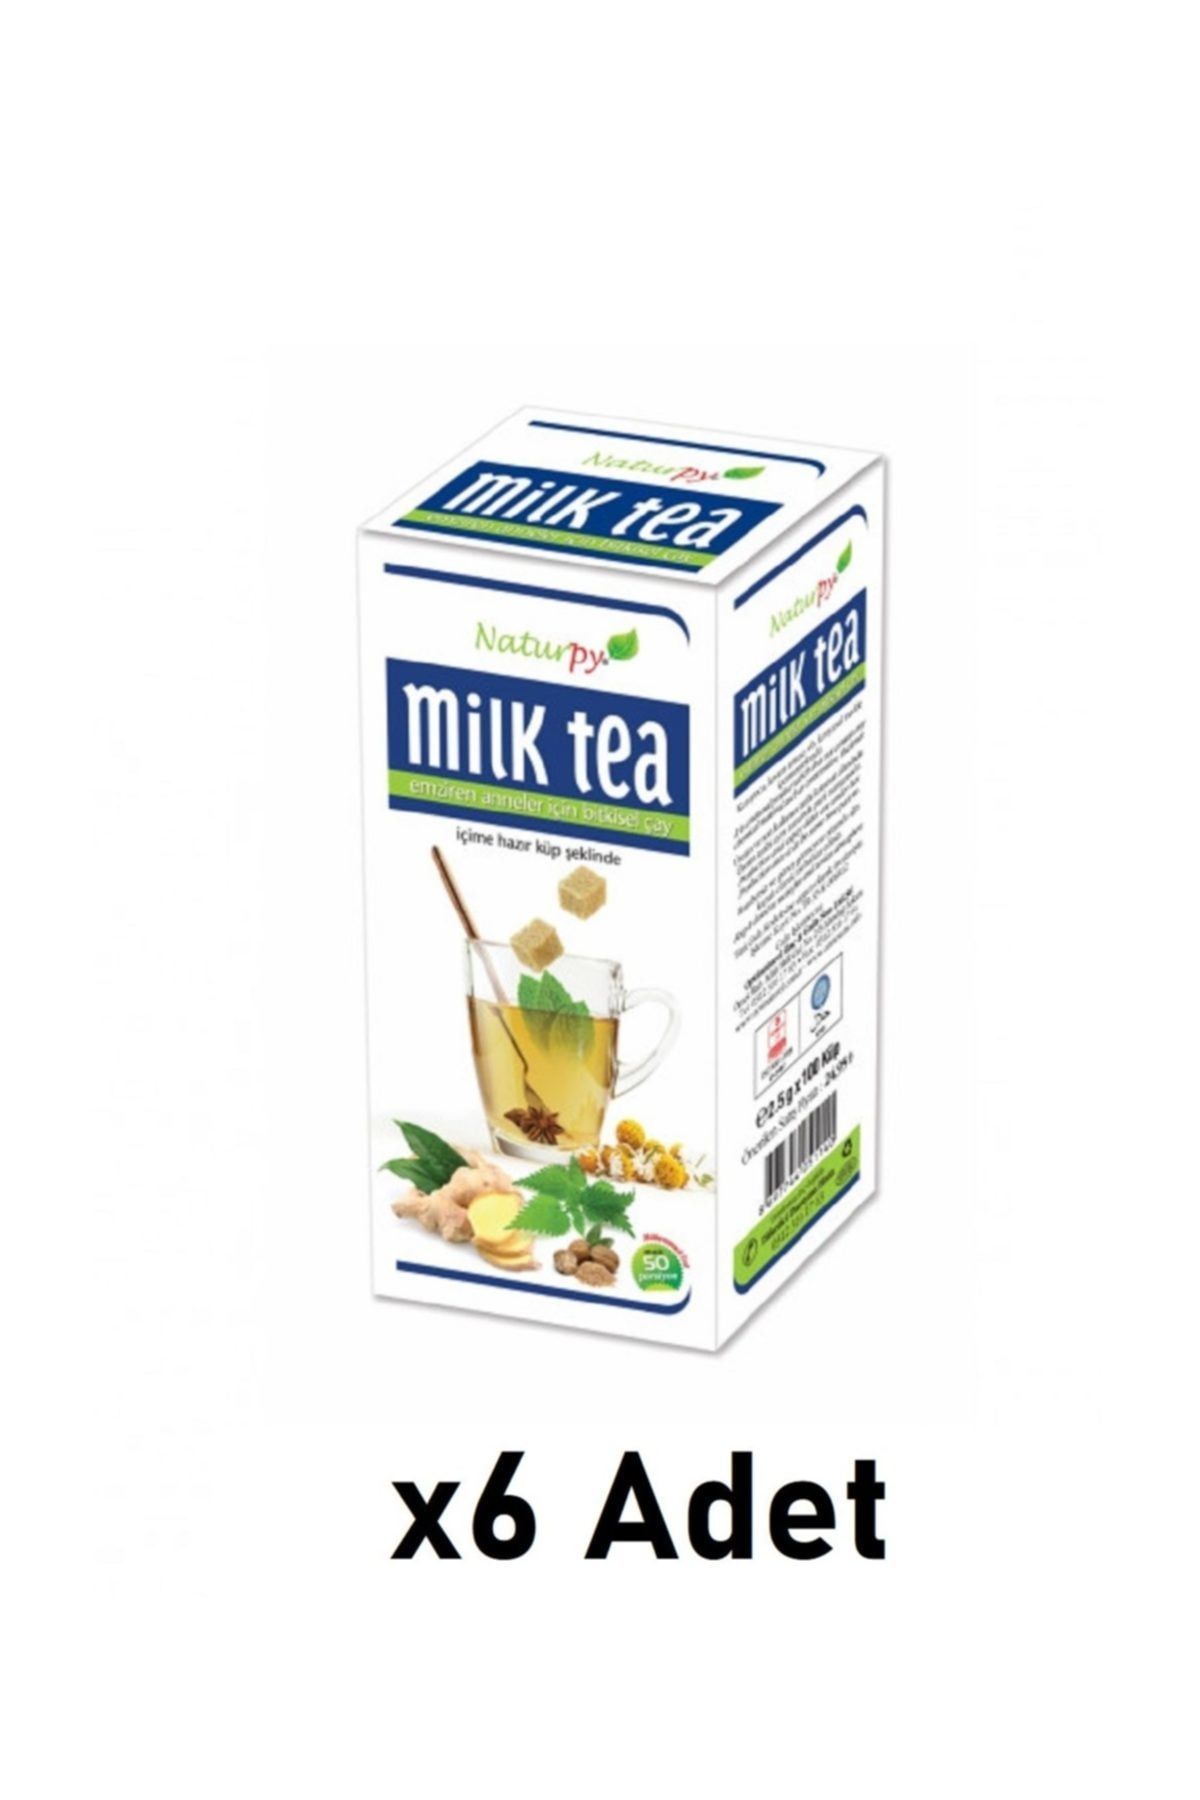 Naturpy Milk Tea Anne Sütü Çayı 250 gr 6 Adet